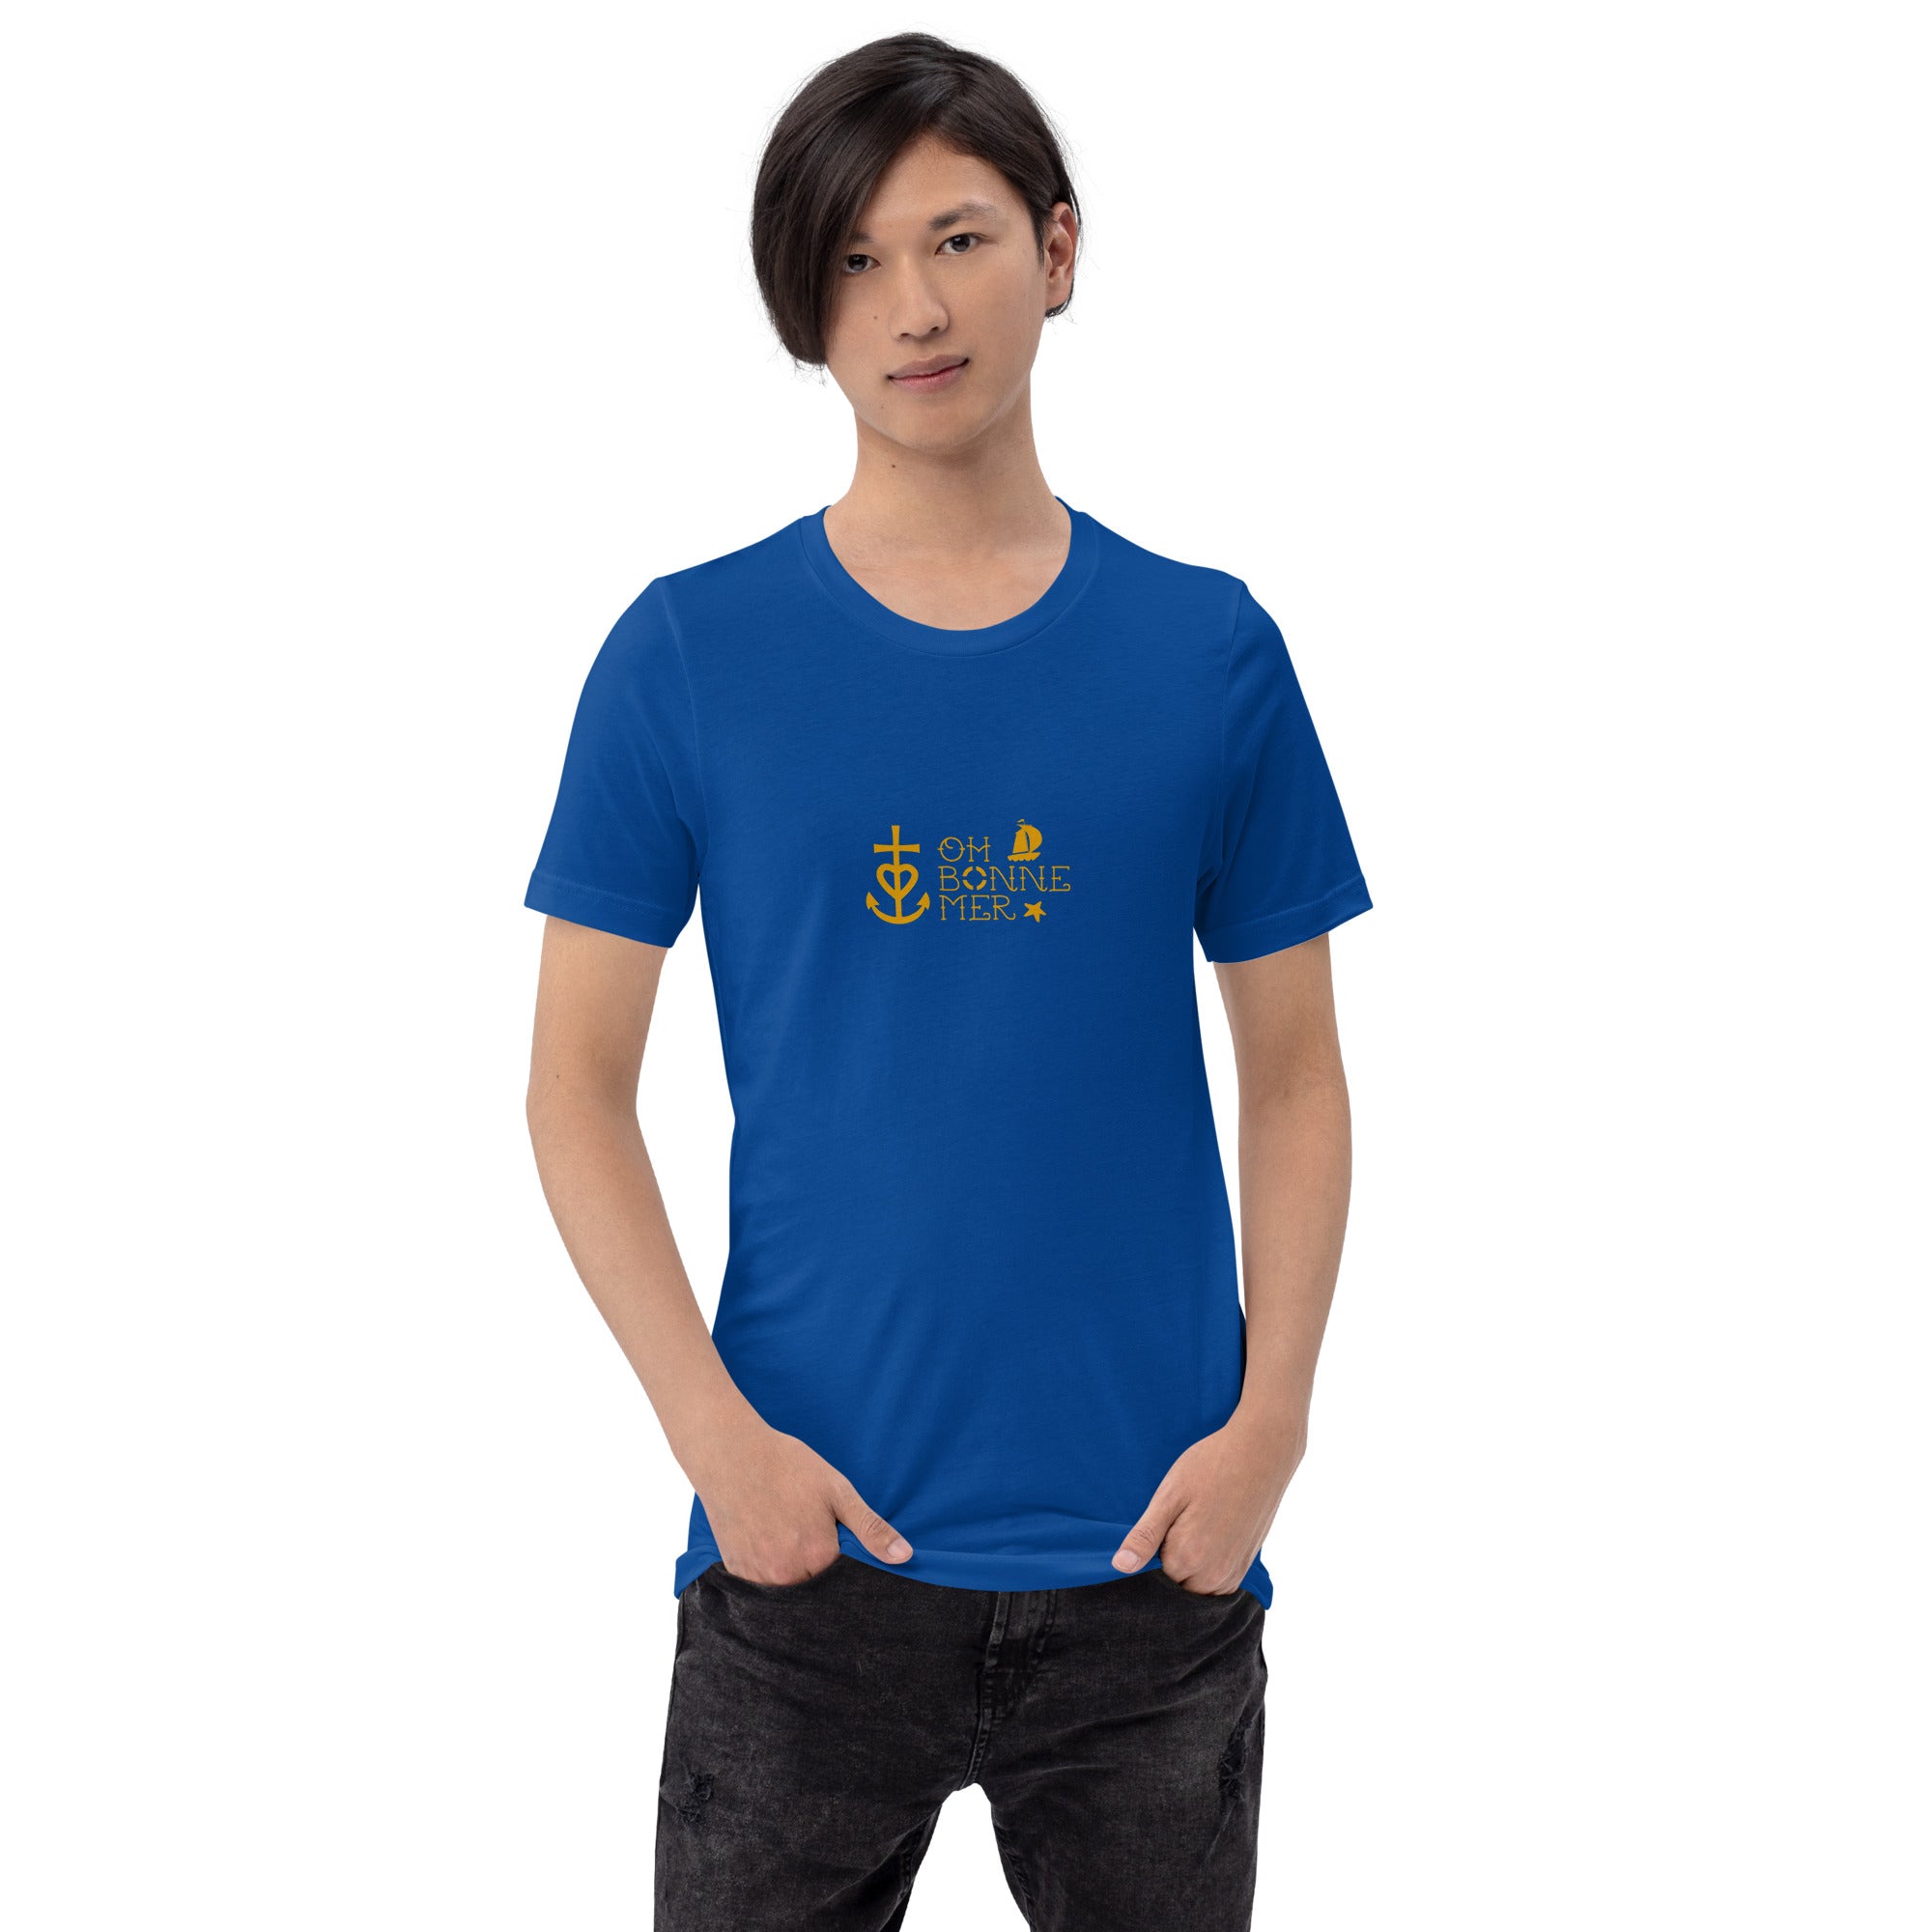 Unisex cotton t-shirt Oh Bonne Mer 2 on dark colors